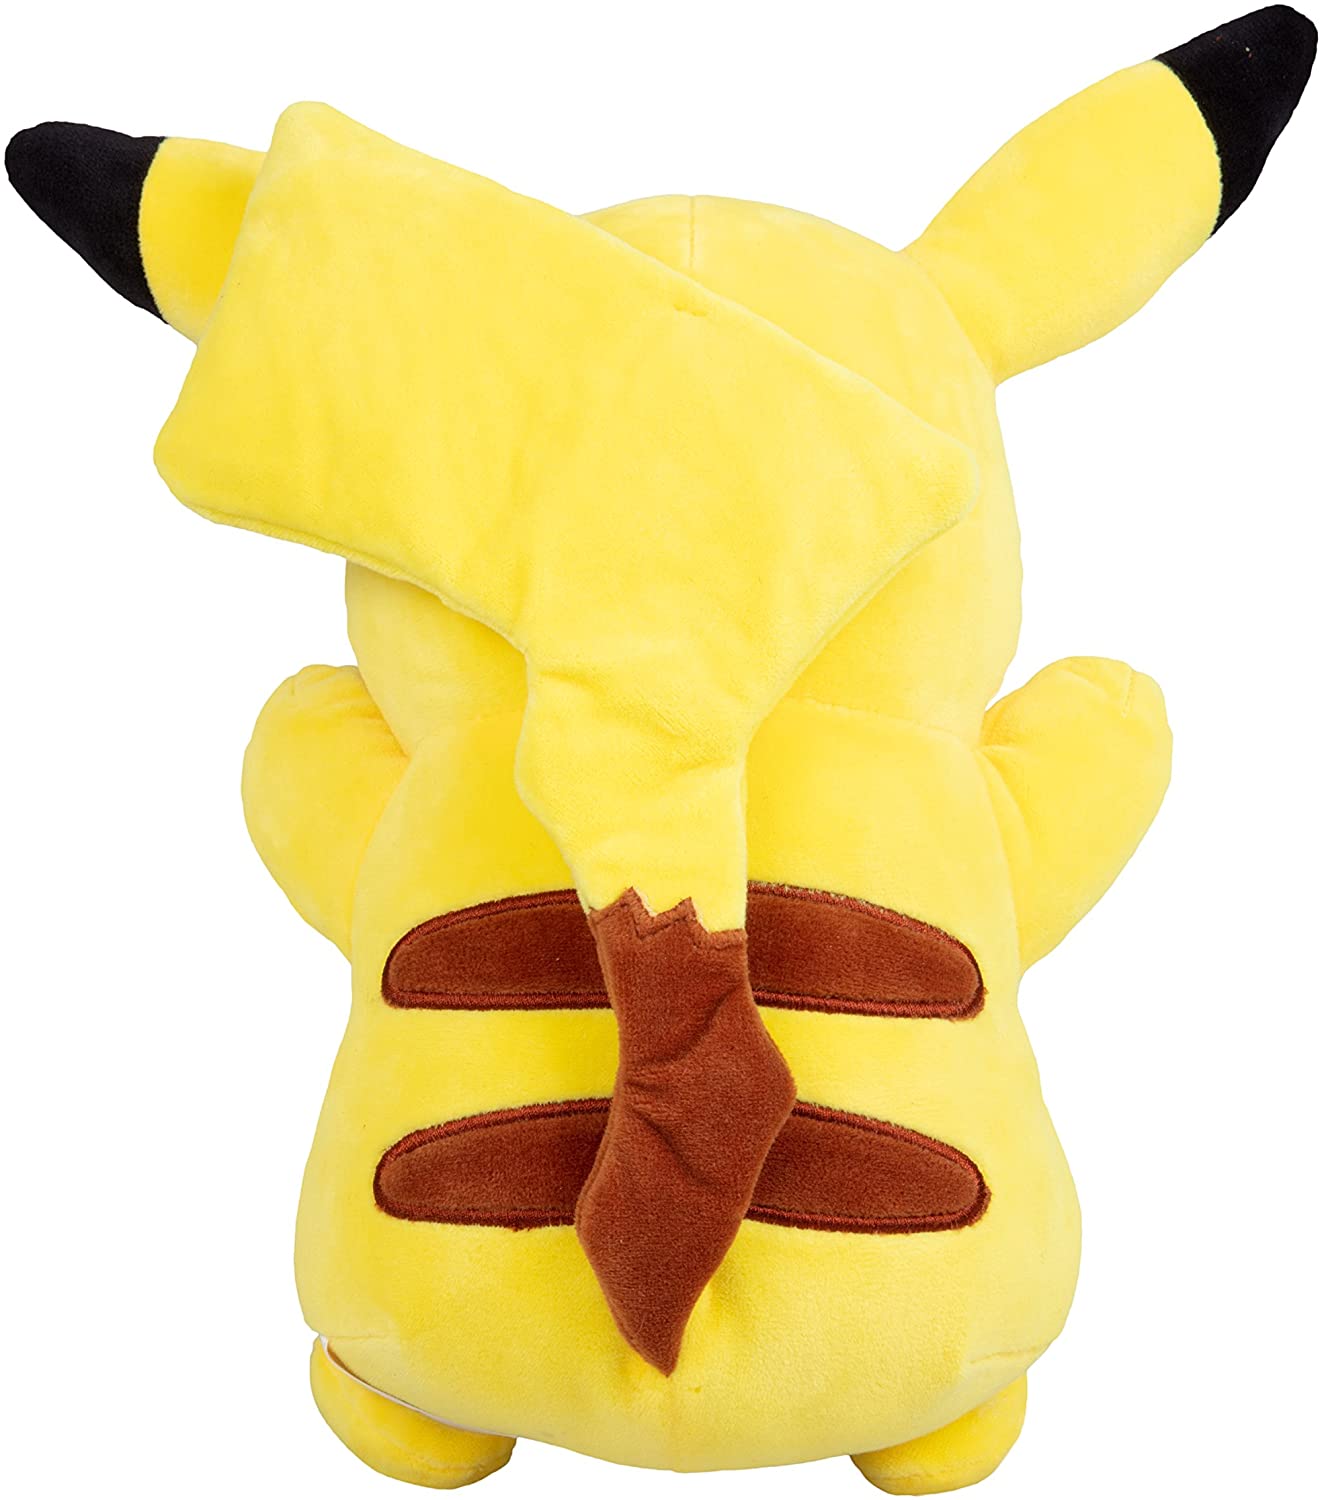 Pikachu Plush Figure